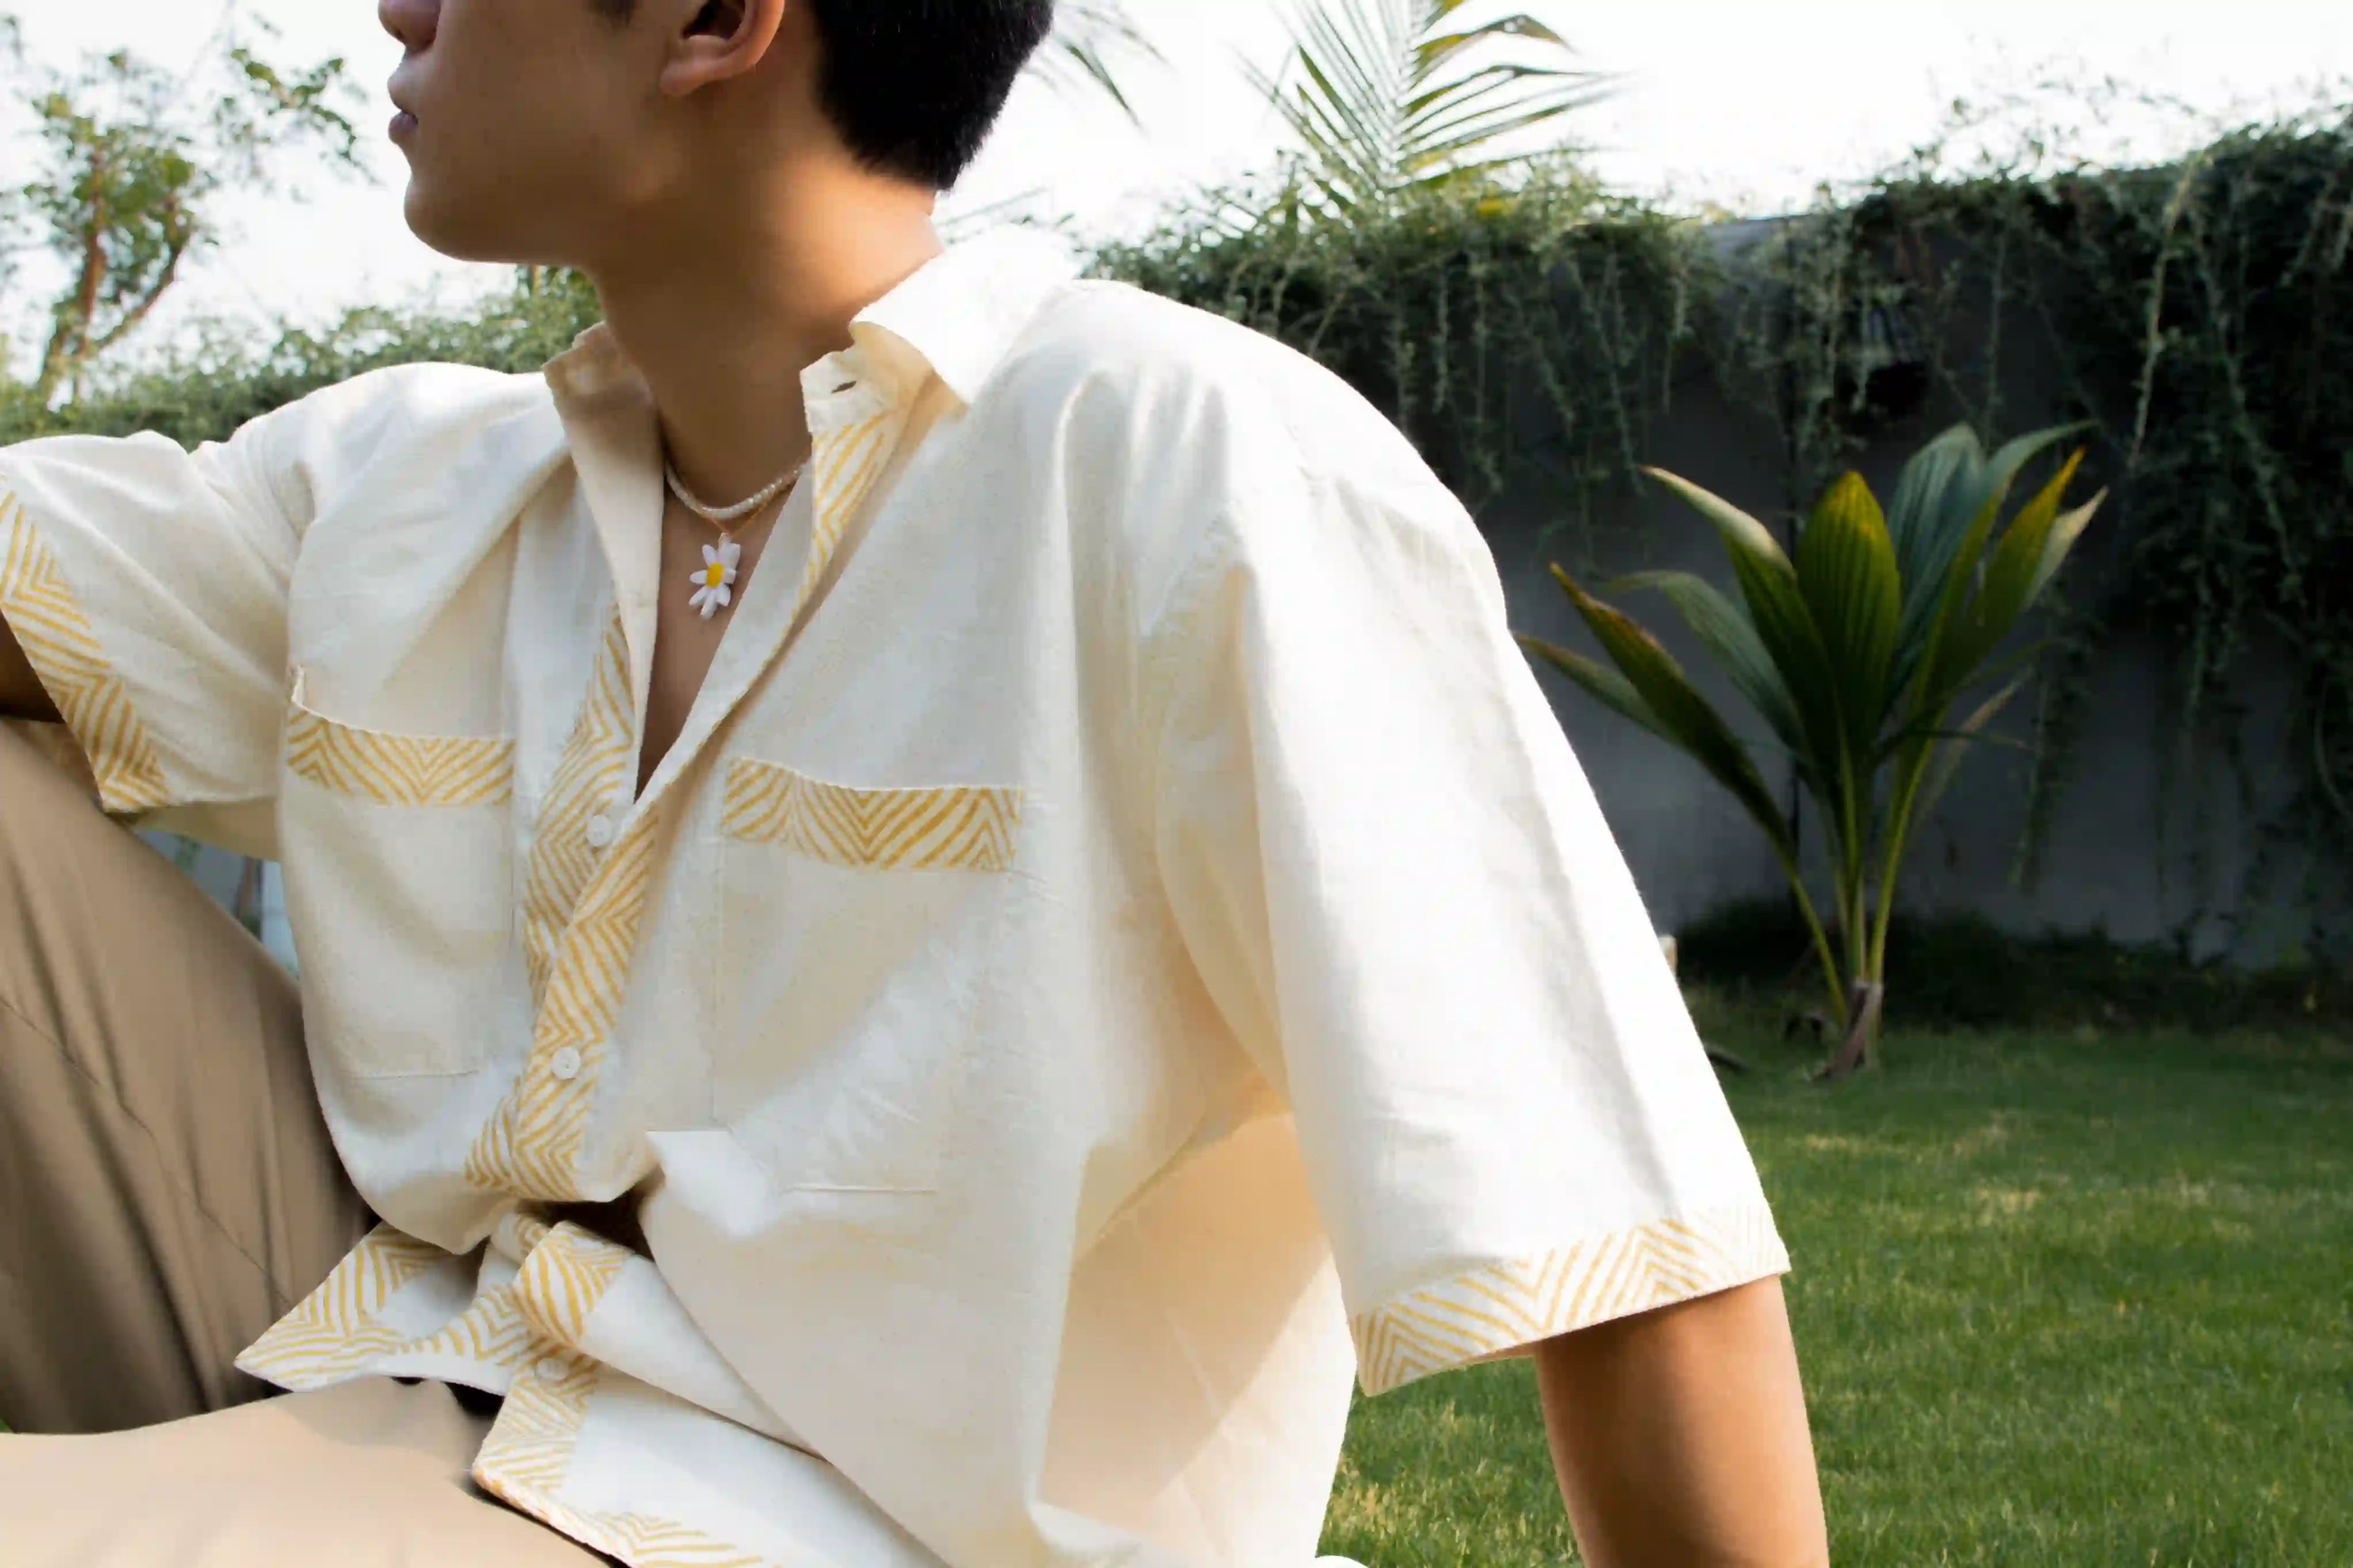 ilamra men's hand block printed naturally dyed organic cotton off-white and yellow shirt